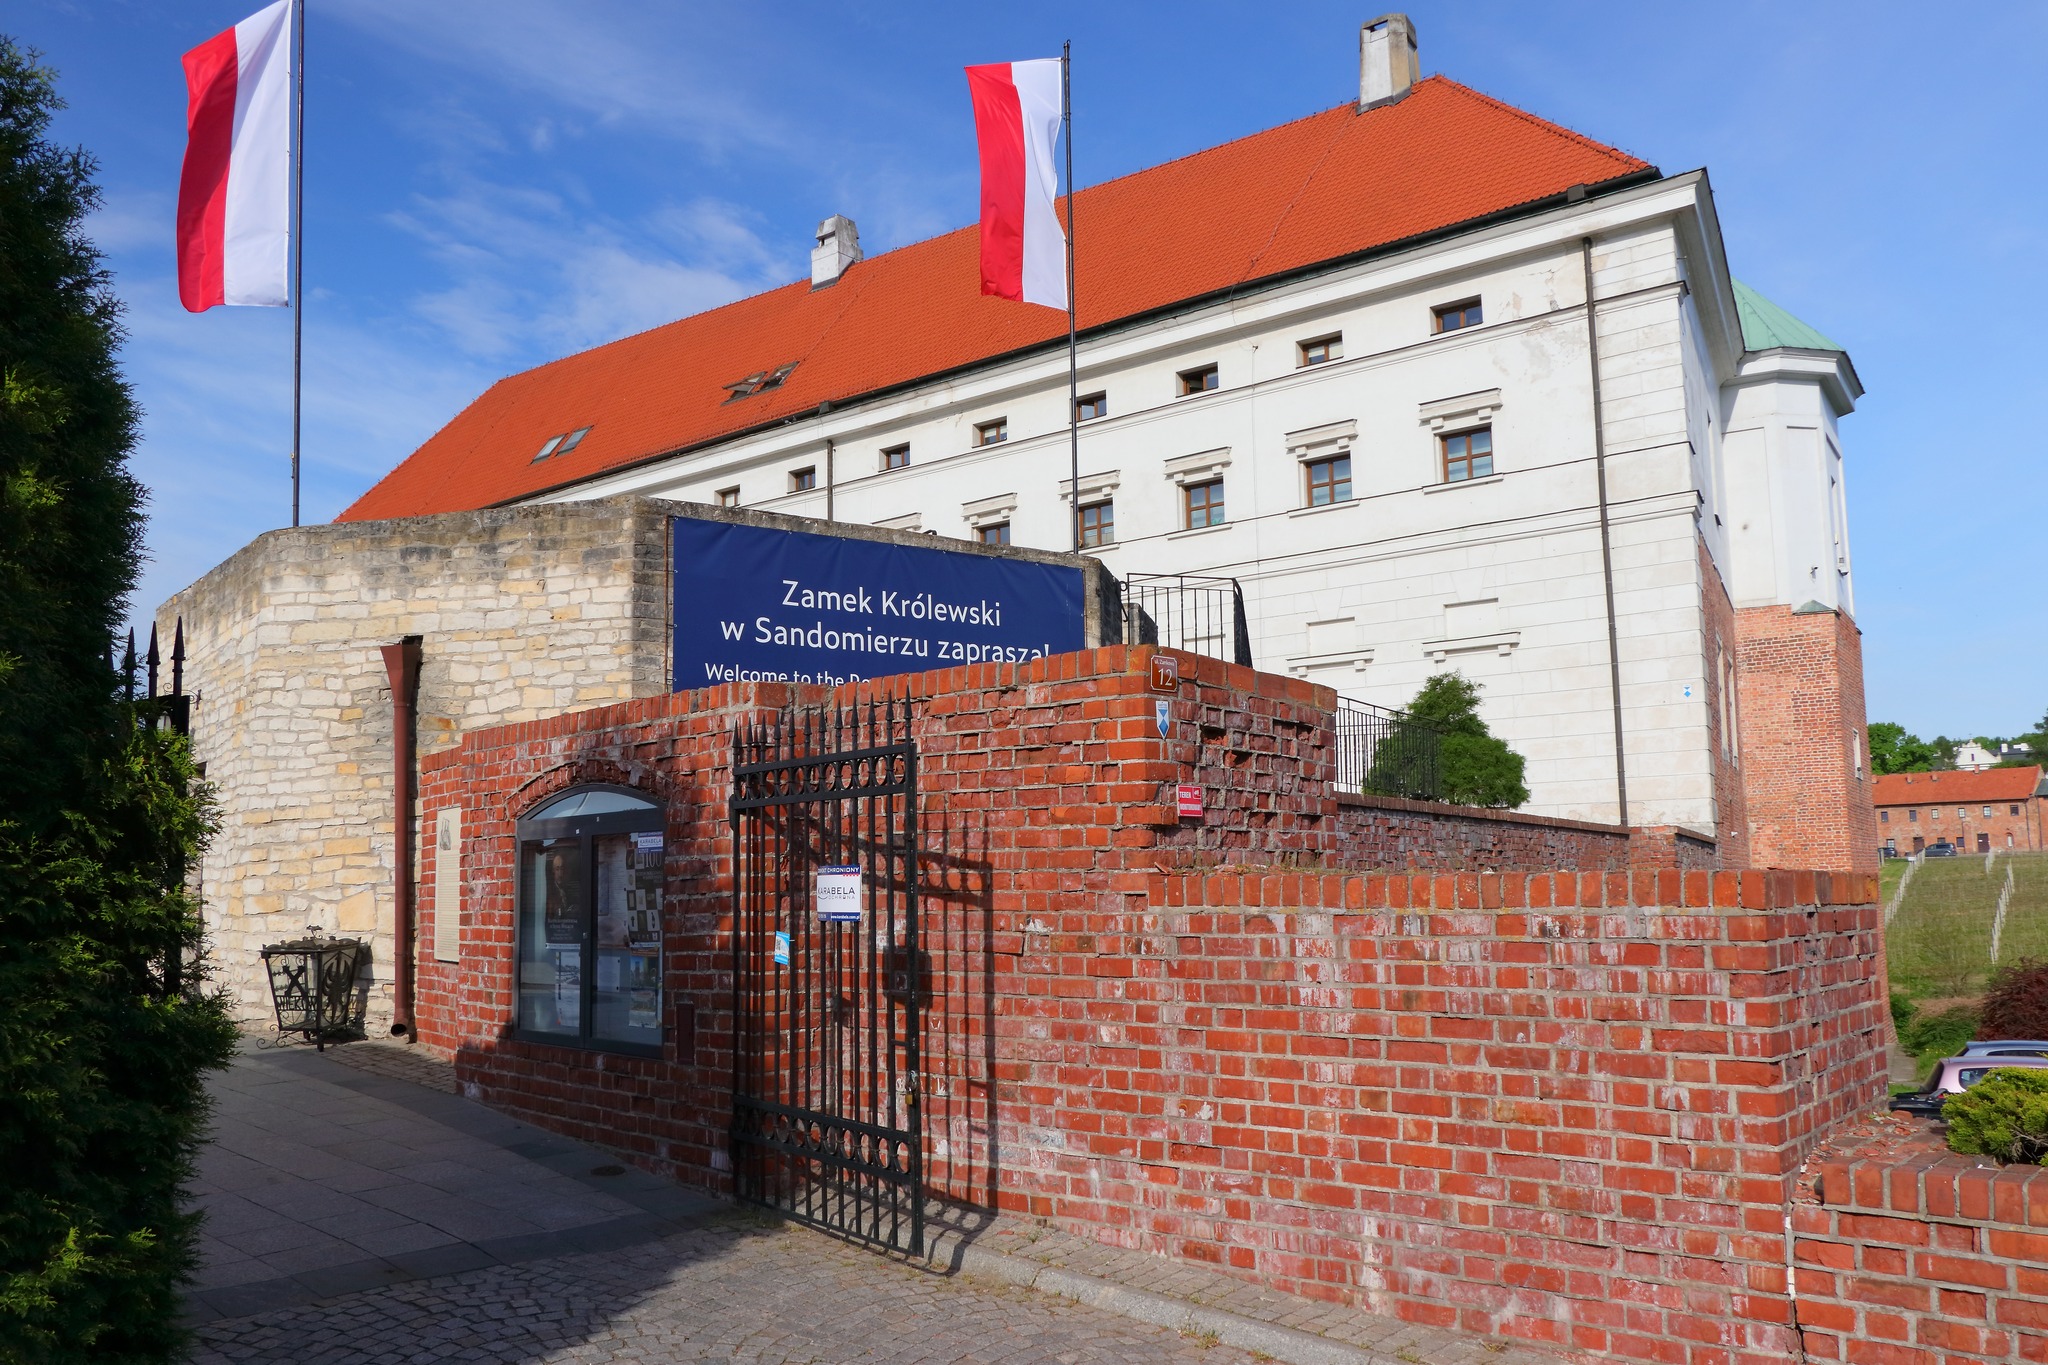 Muzeum Zamkowe